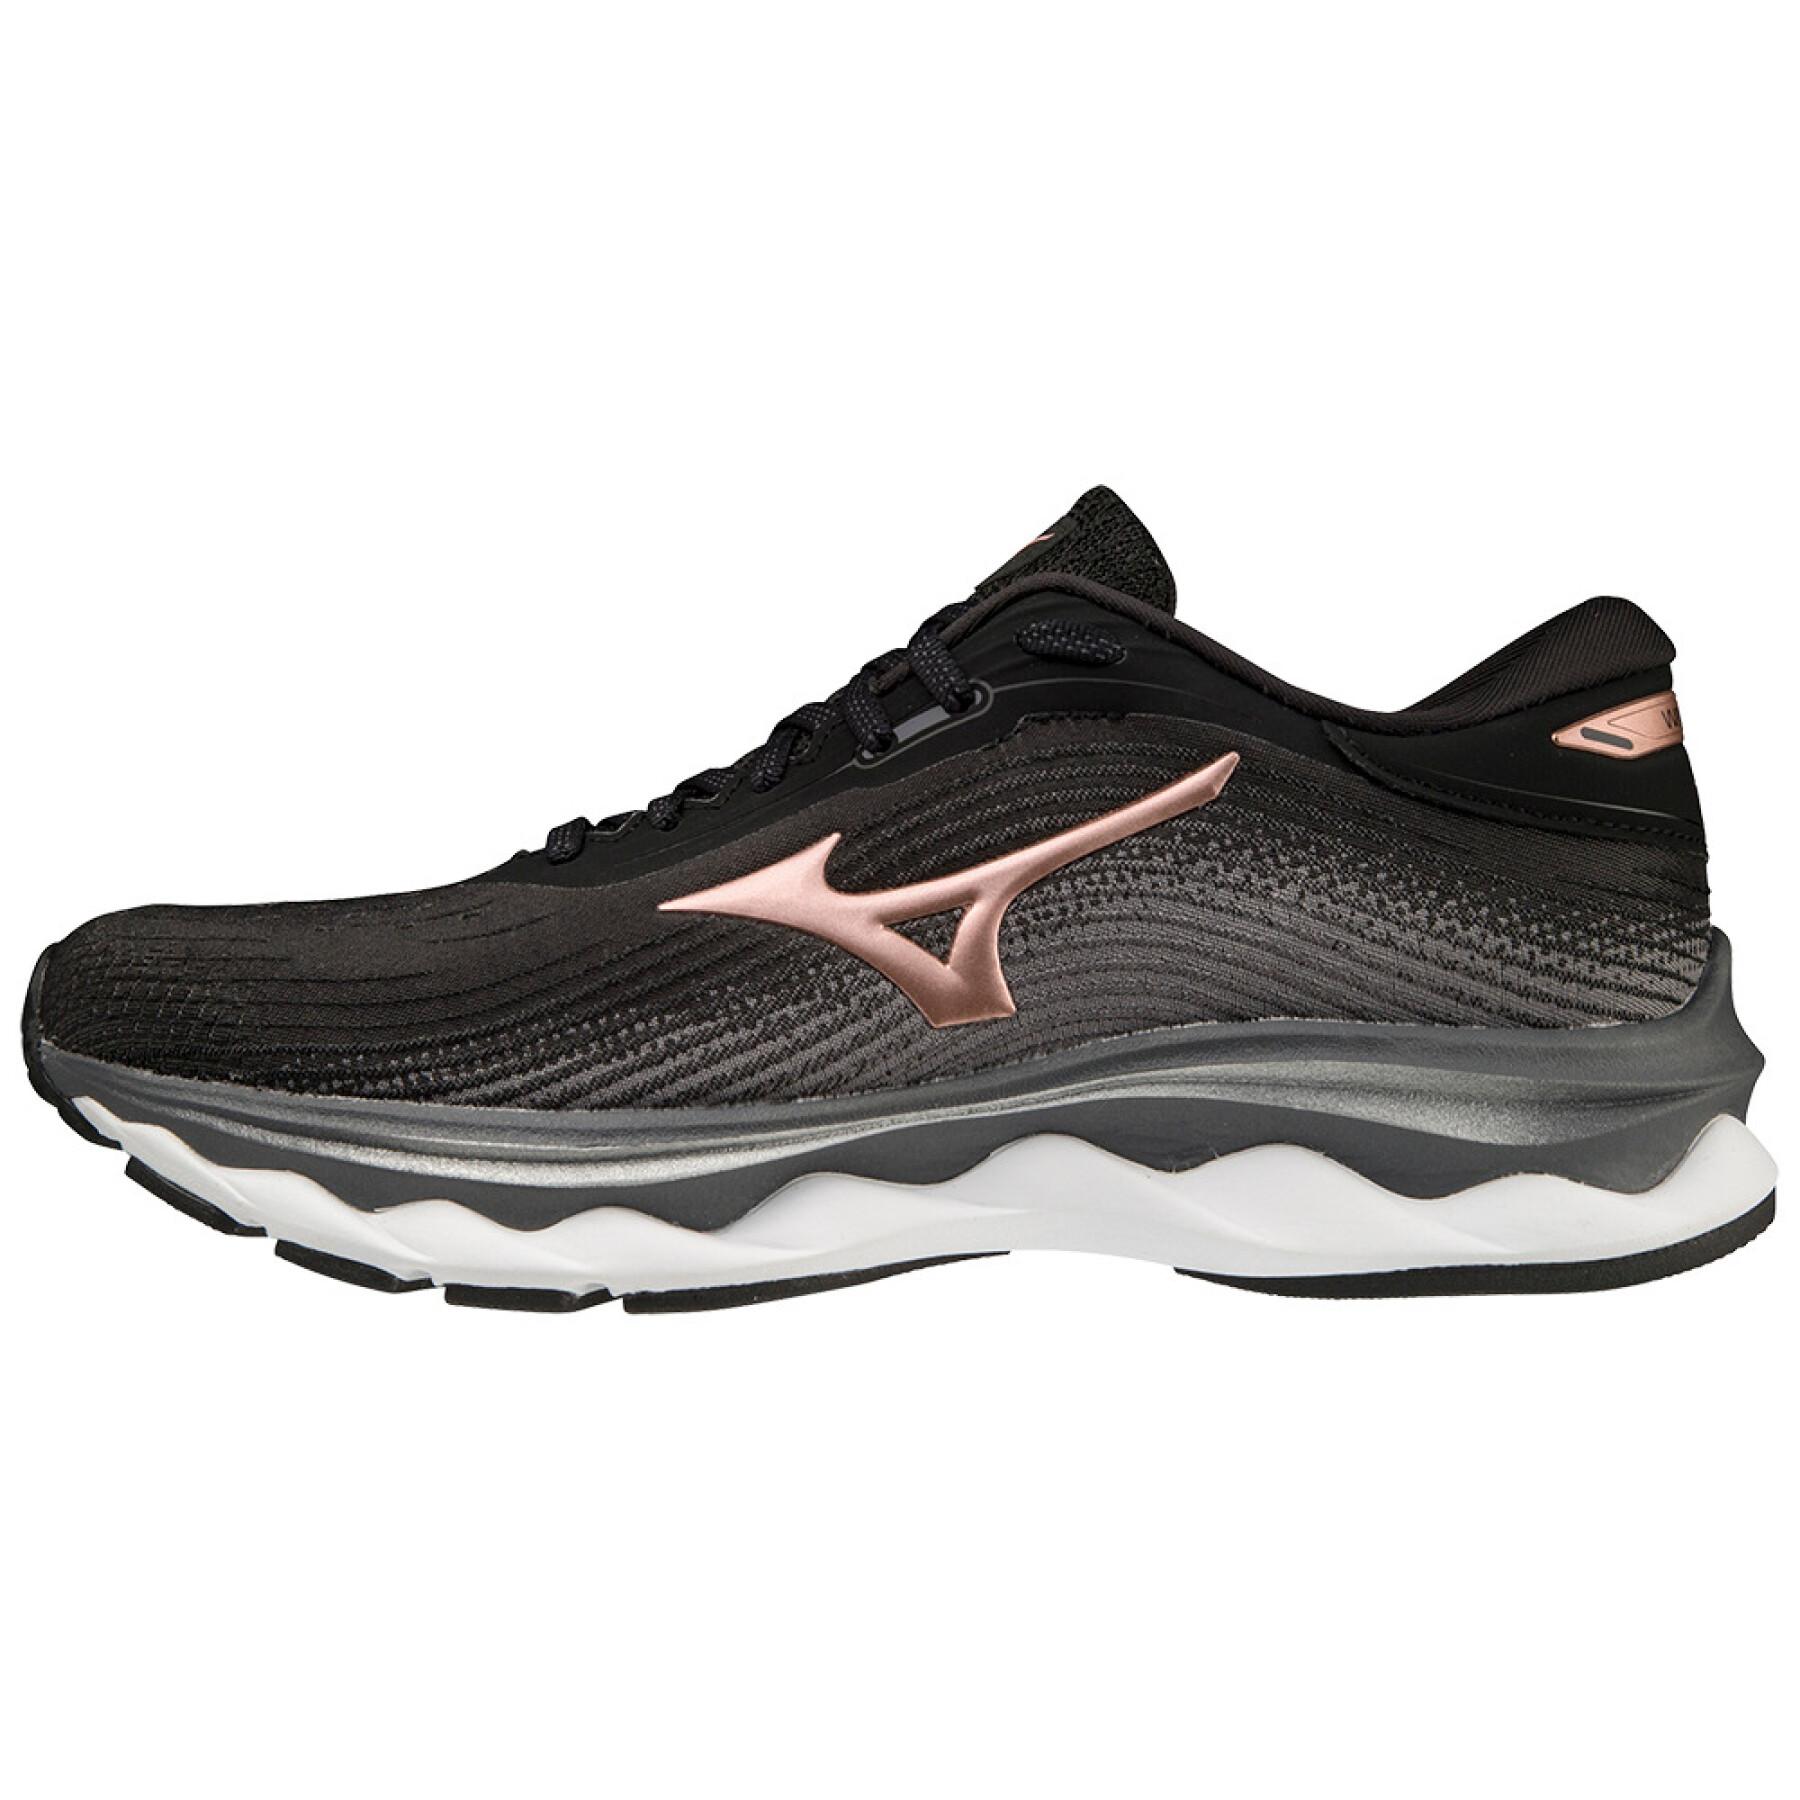 Women's running shoes Mizuno Wave Sky 5